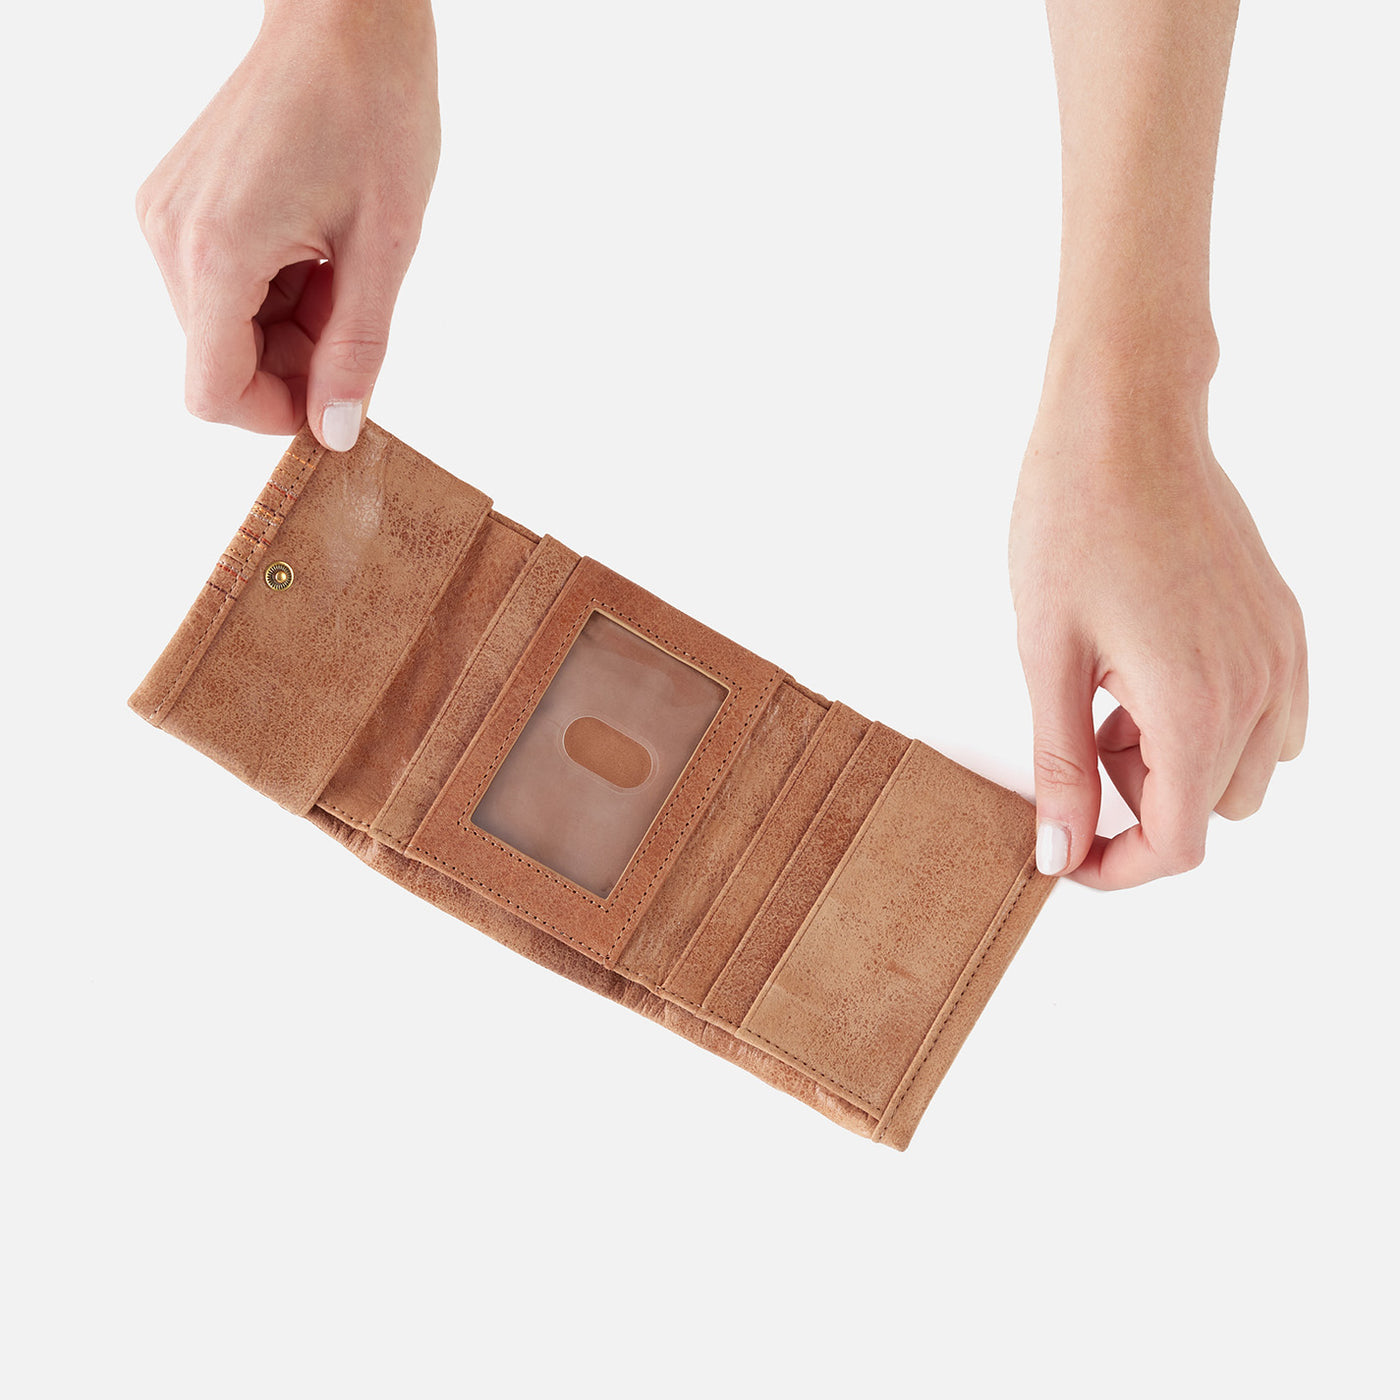 Keen Mini Trifold Compact Wallet in Buffed Leather - Tan